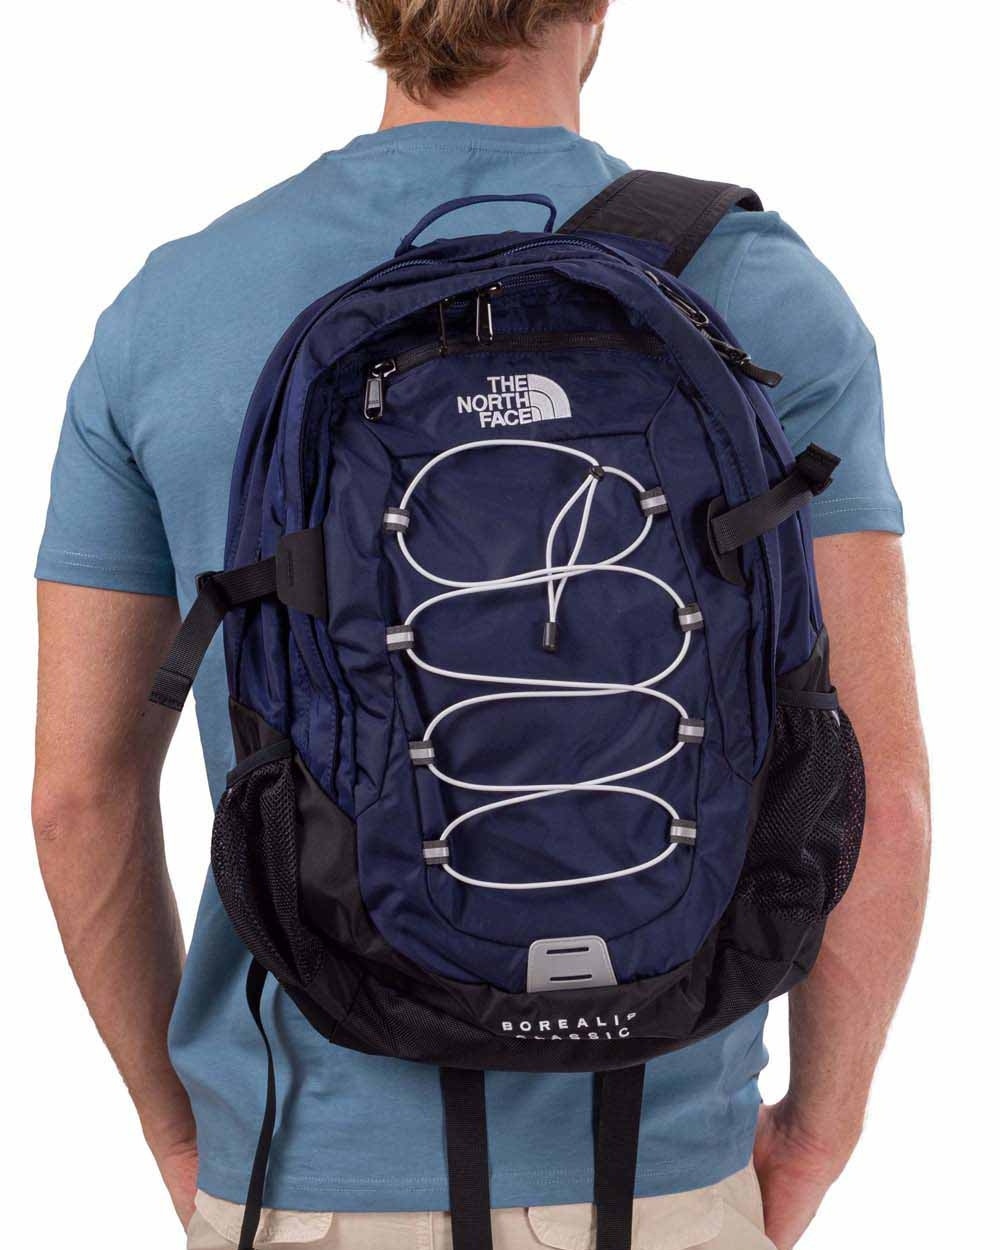  The North Face Zaino Bag Backpack Blu Poliestere Borealis Classic